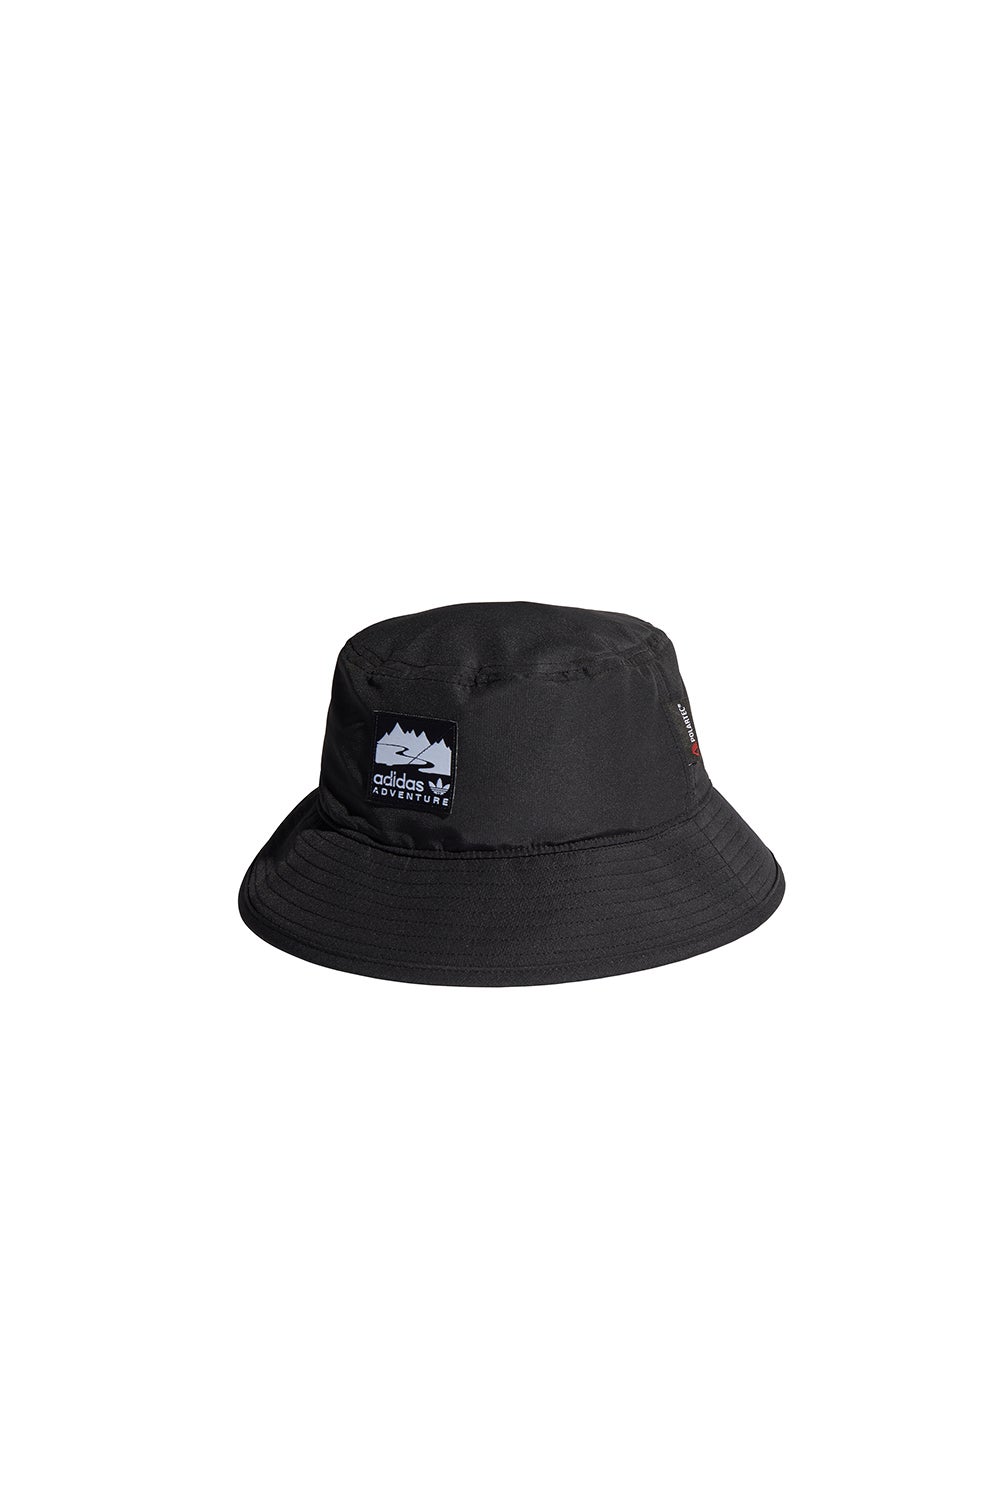 adidas ADV Boonie Hat Black